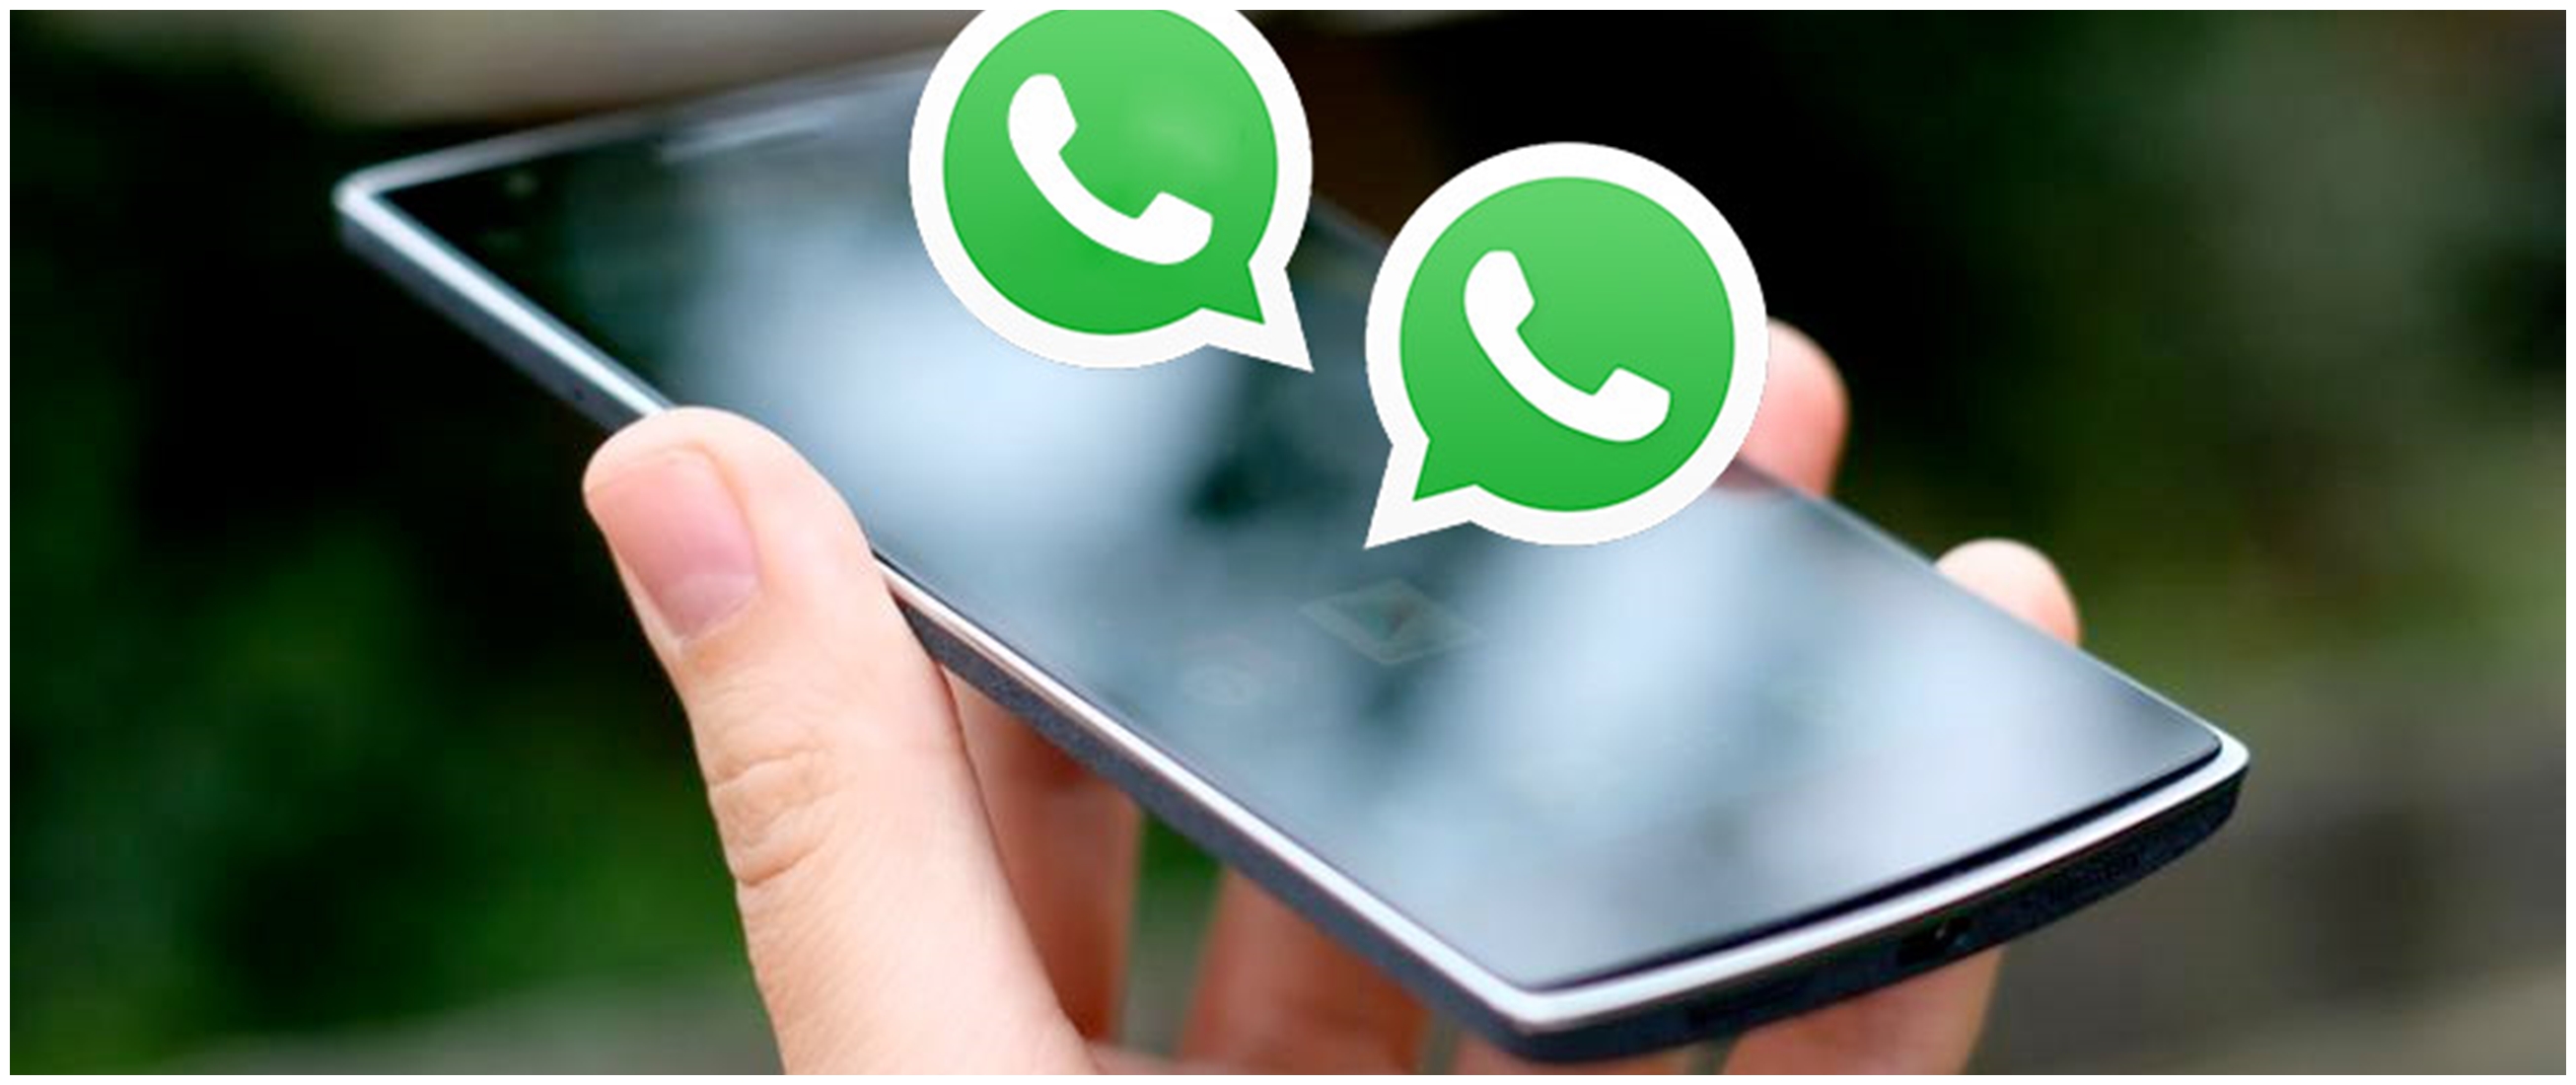 WhatsApp ungkap 12 kerentanan, 7 di antaranya 'kritis'